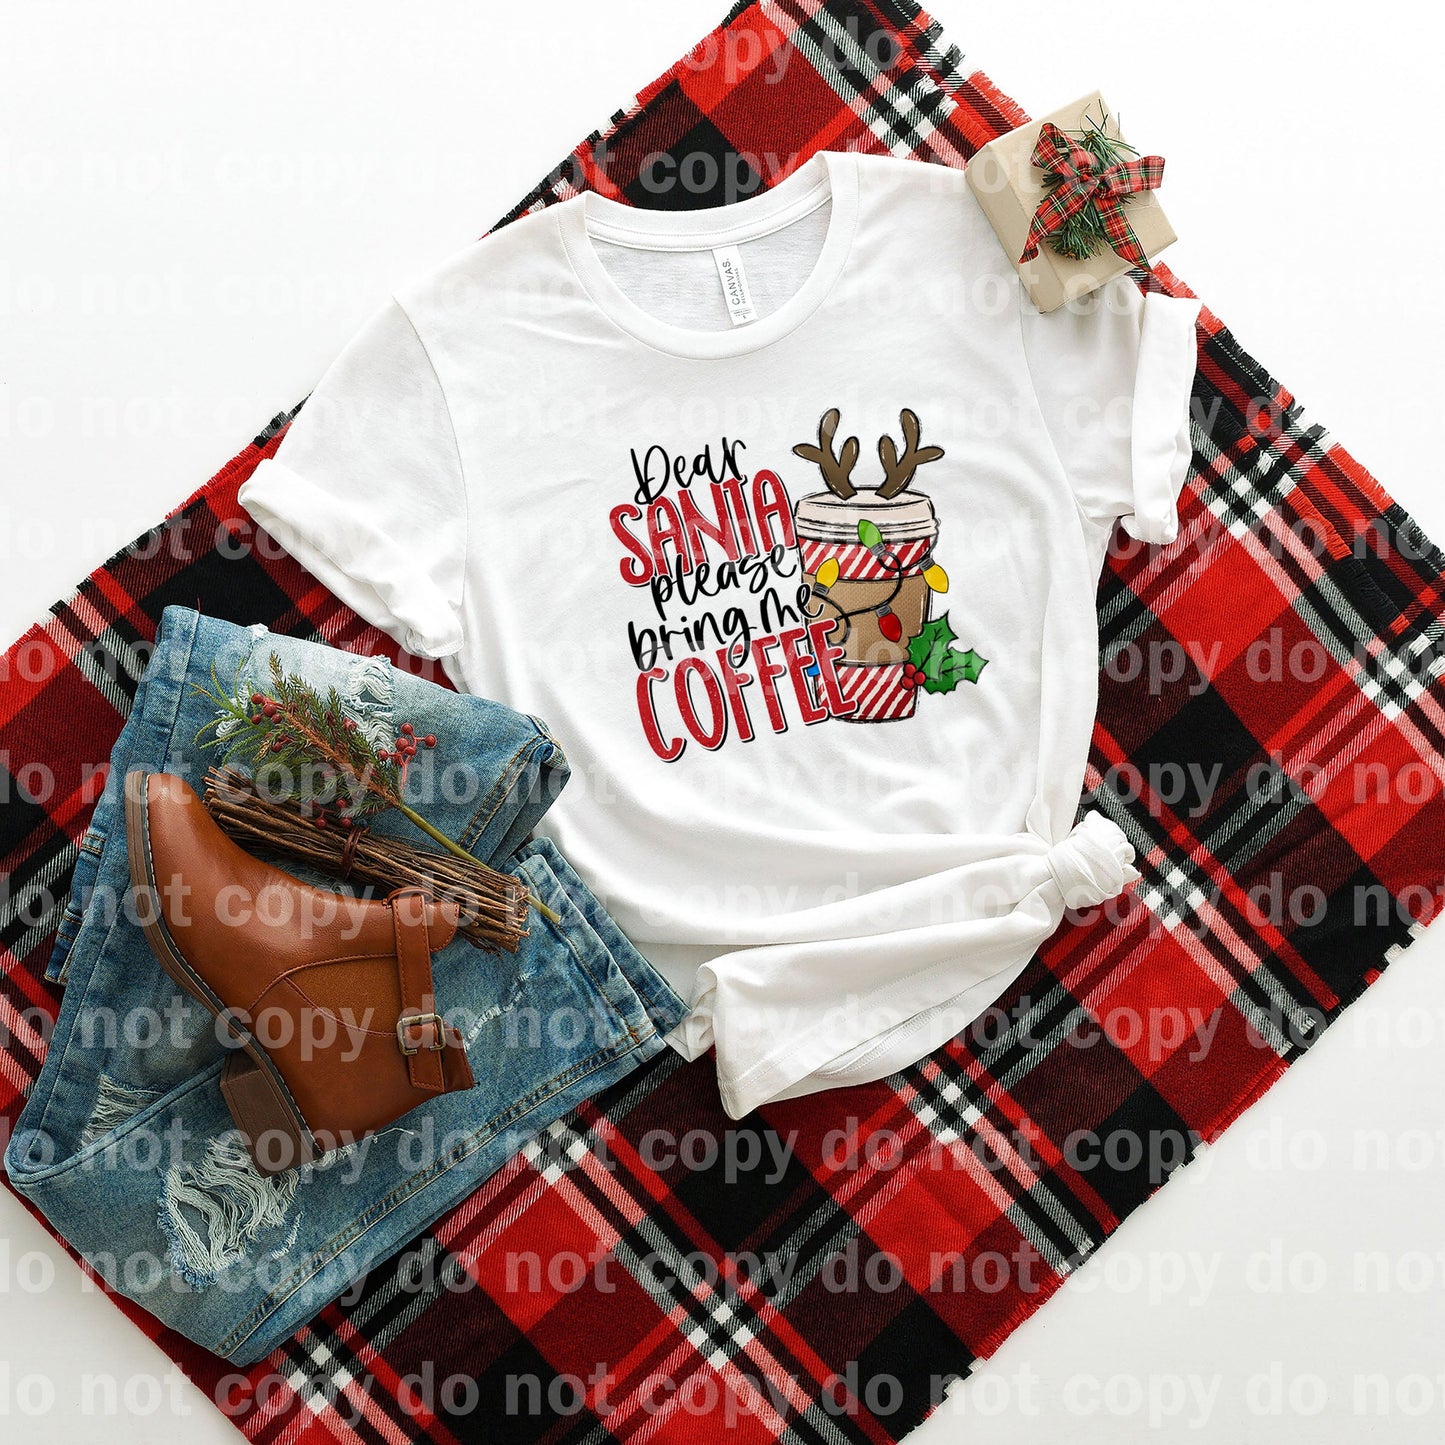 Dear Santa Please Bring Me Coffee Dream Print or Sublimation Print